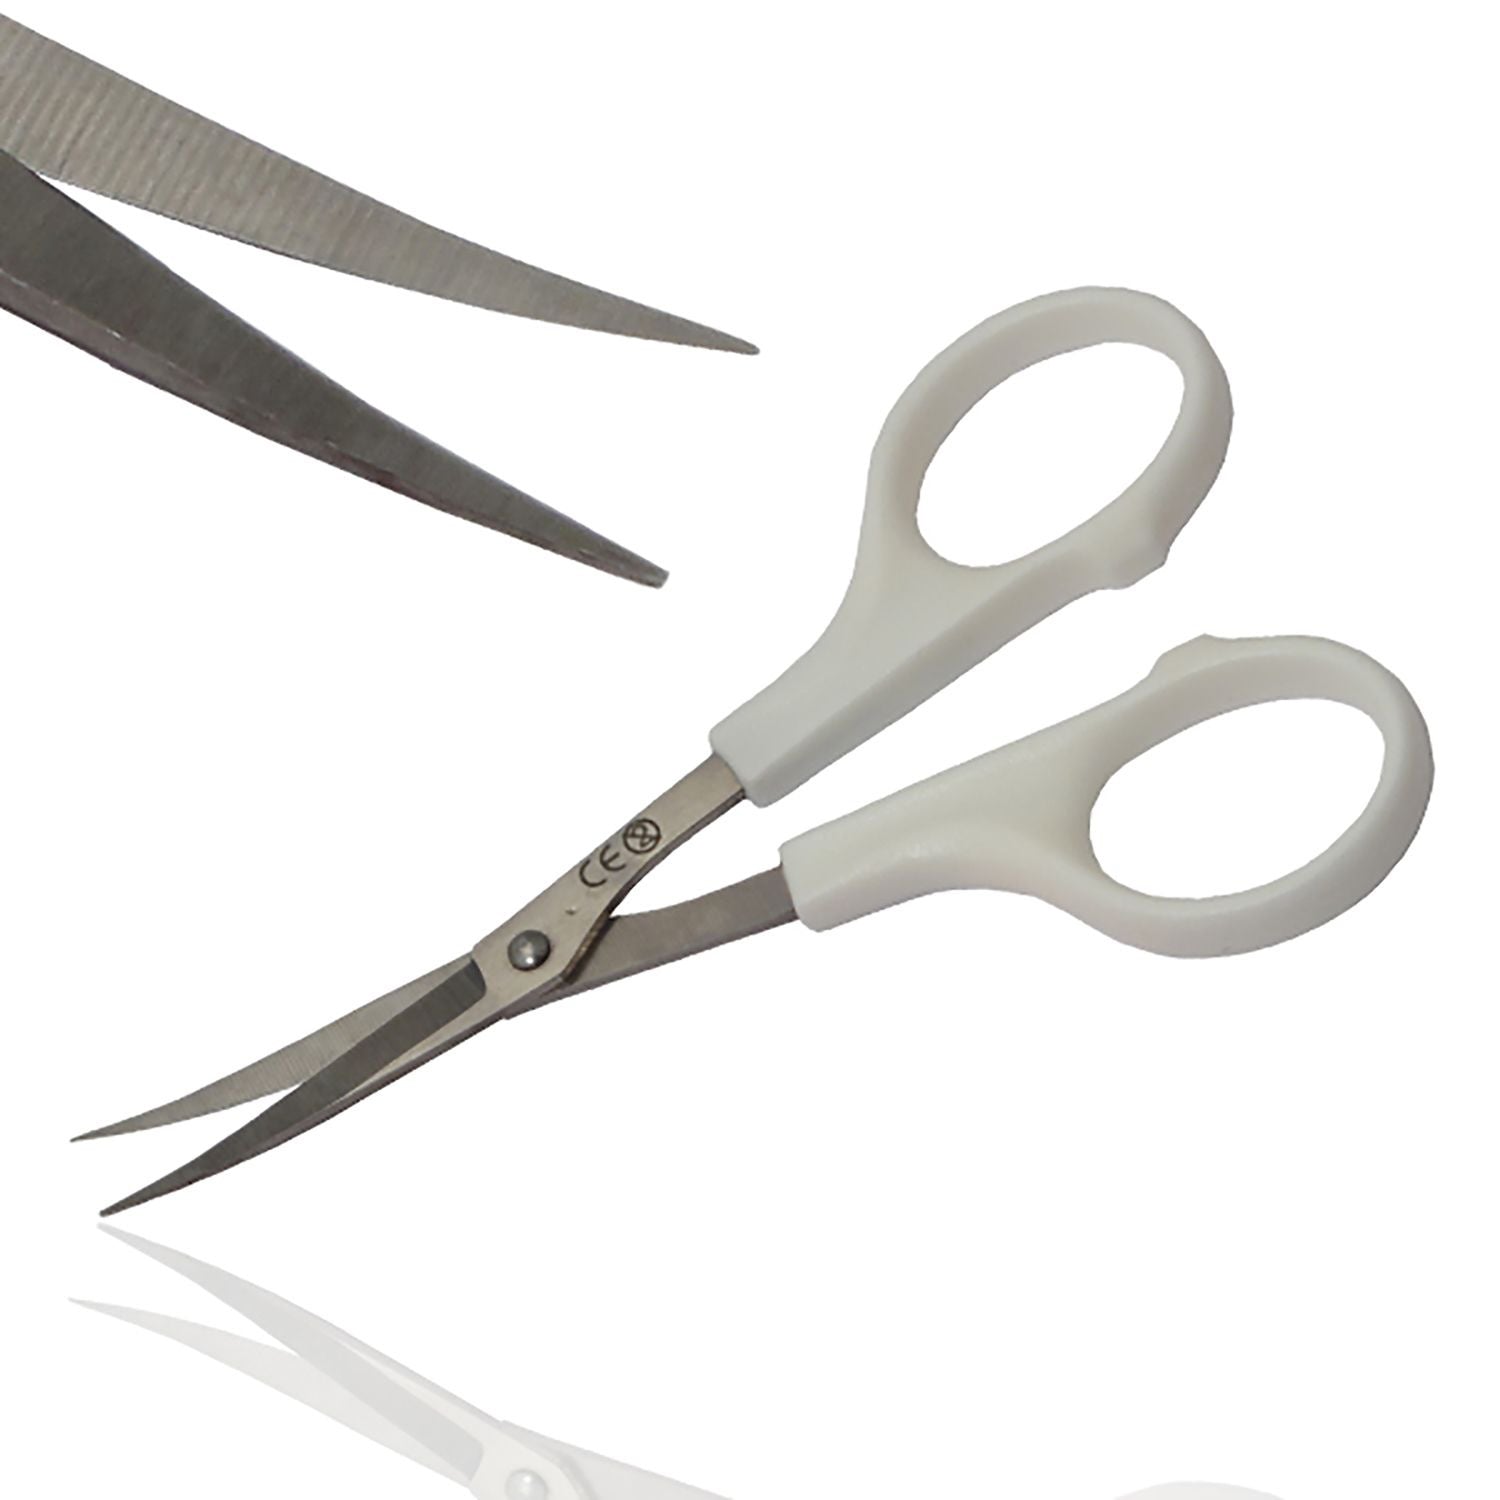 Instramed Iris Scissors | Curved | 11cm | Plastic Handle | Single